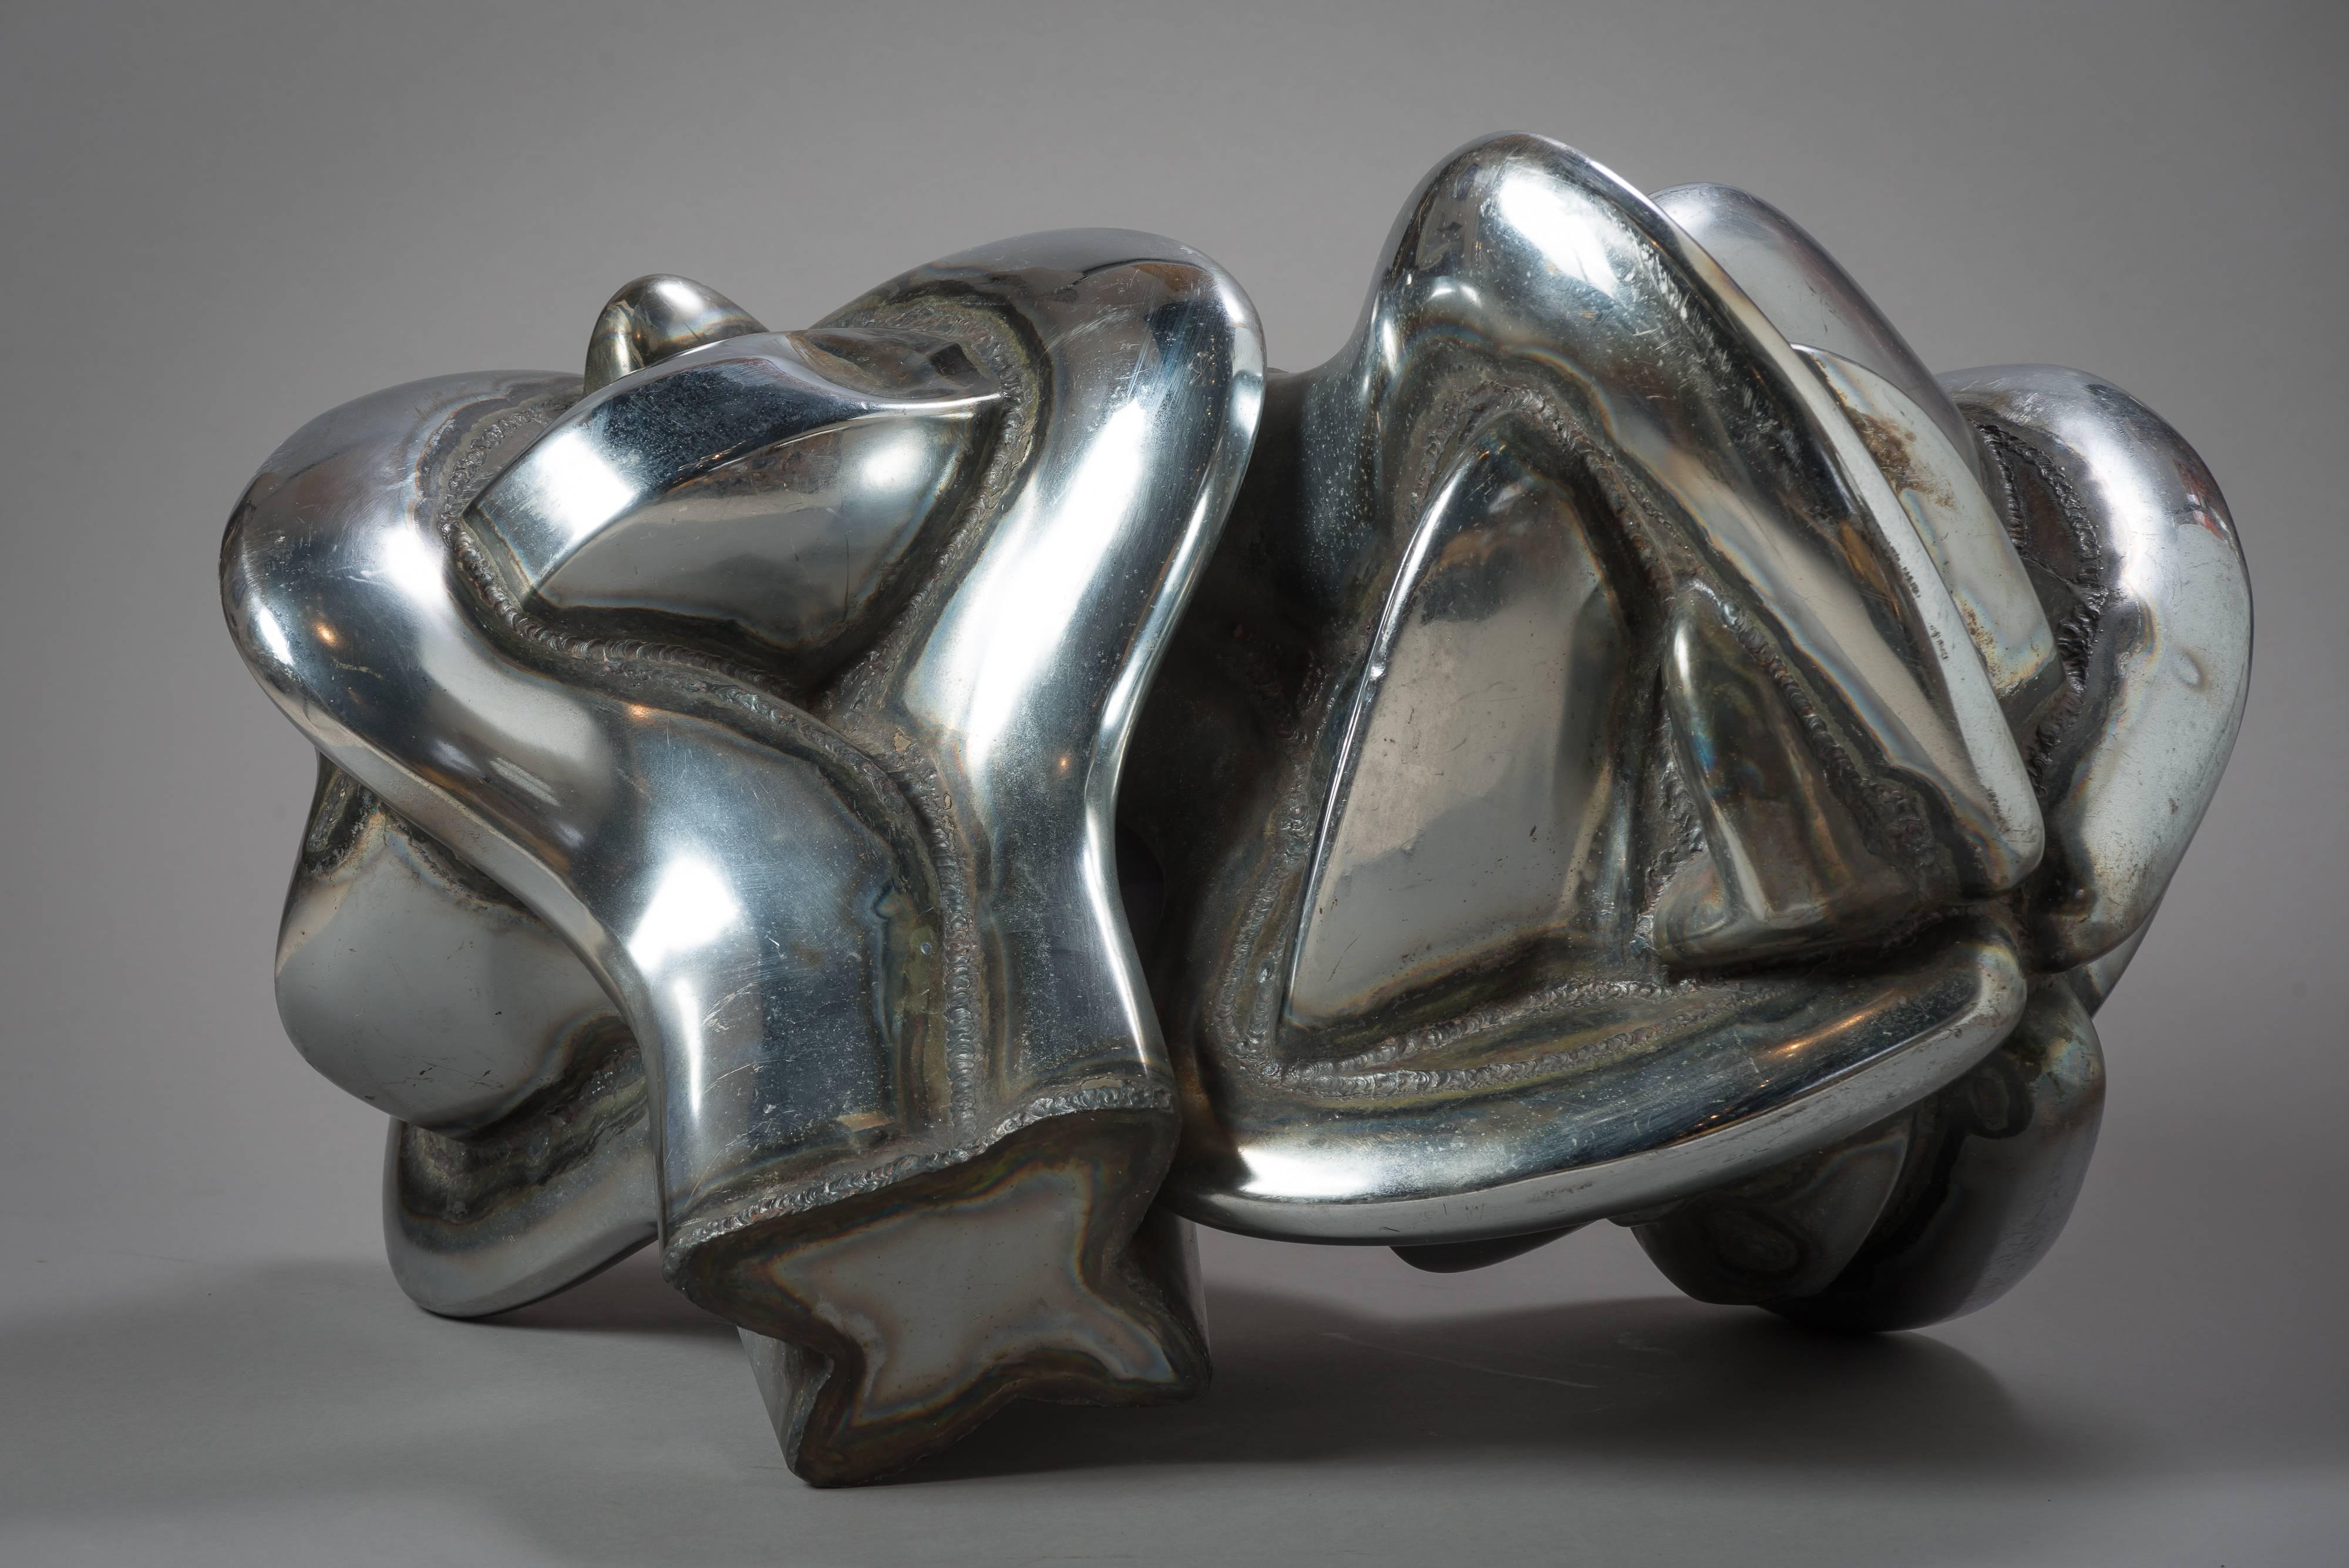 American Jason Seley Welded Metal Sculpture For Sale